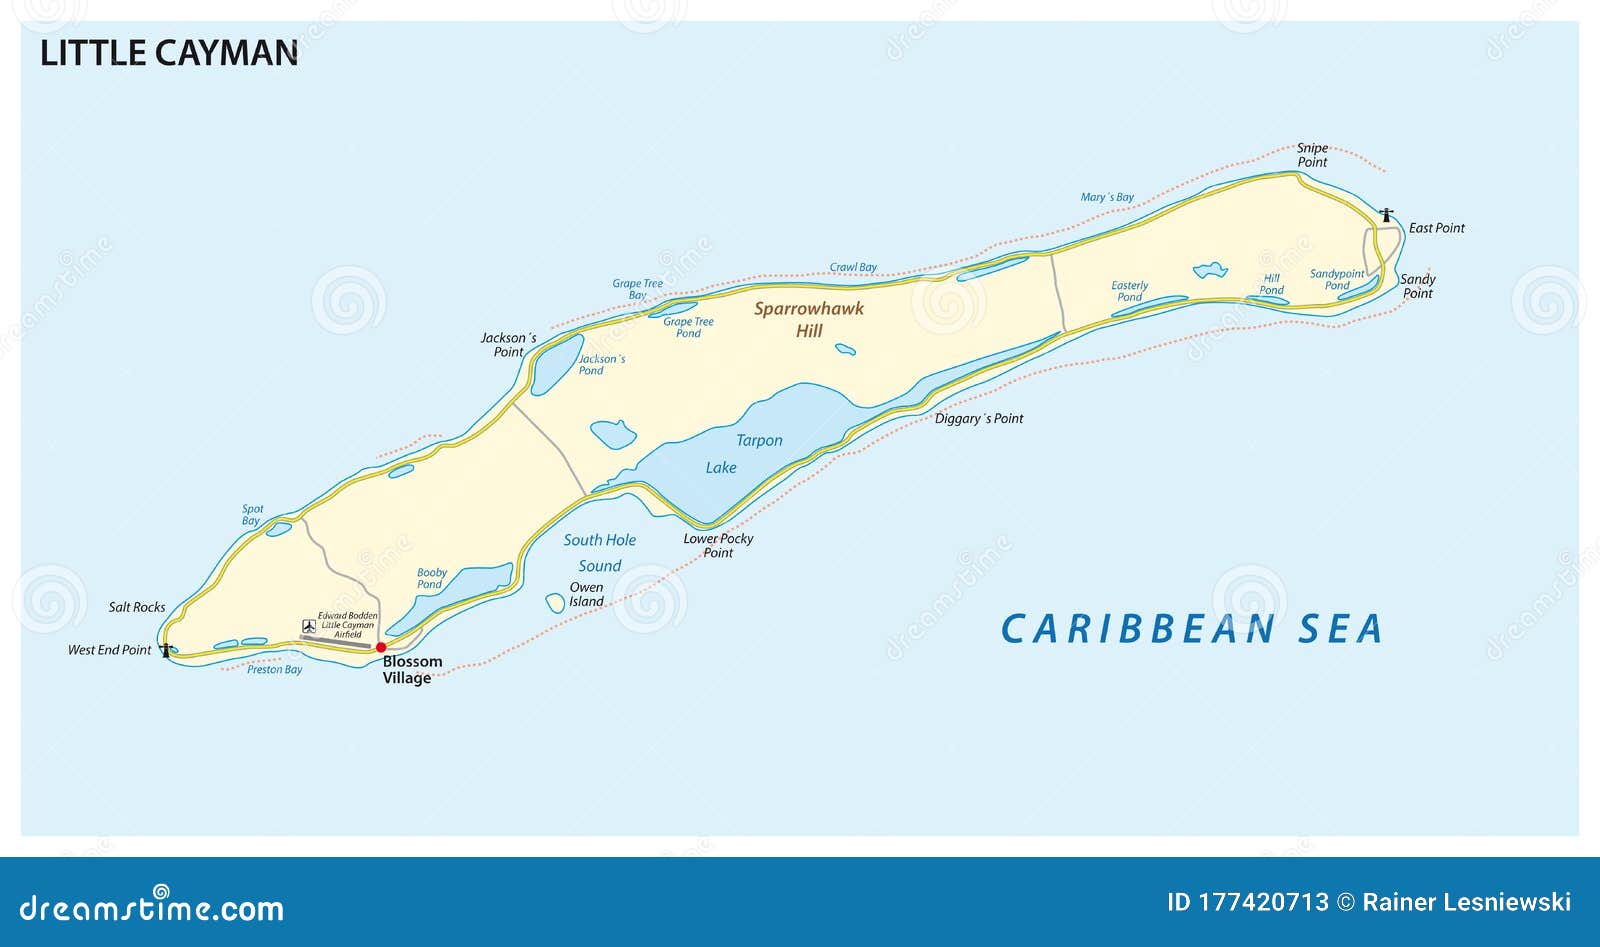 map of cayman brac, an island in the cayman islands, uk